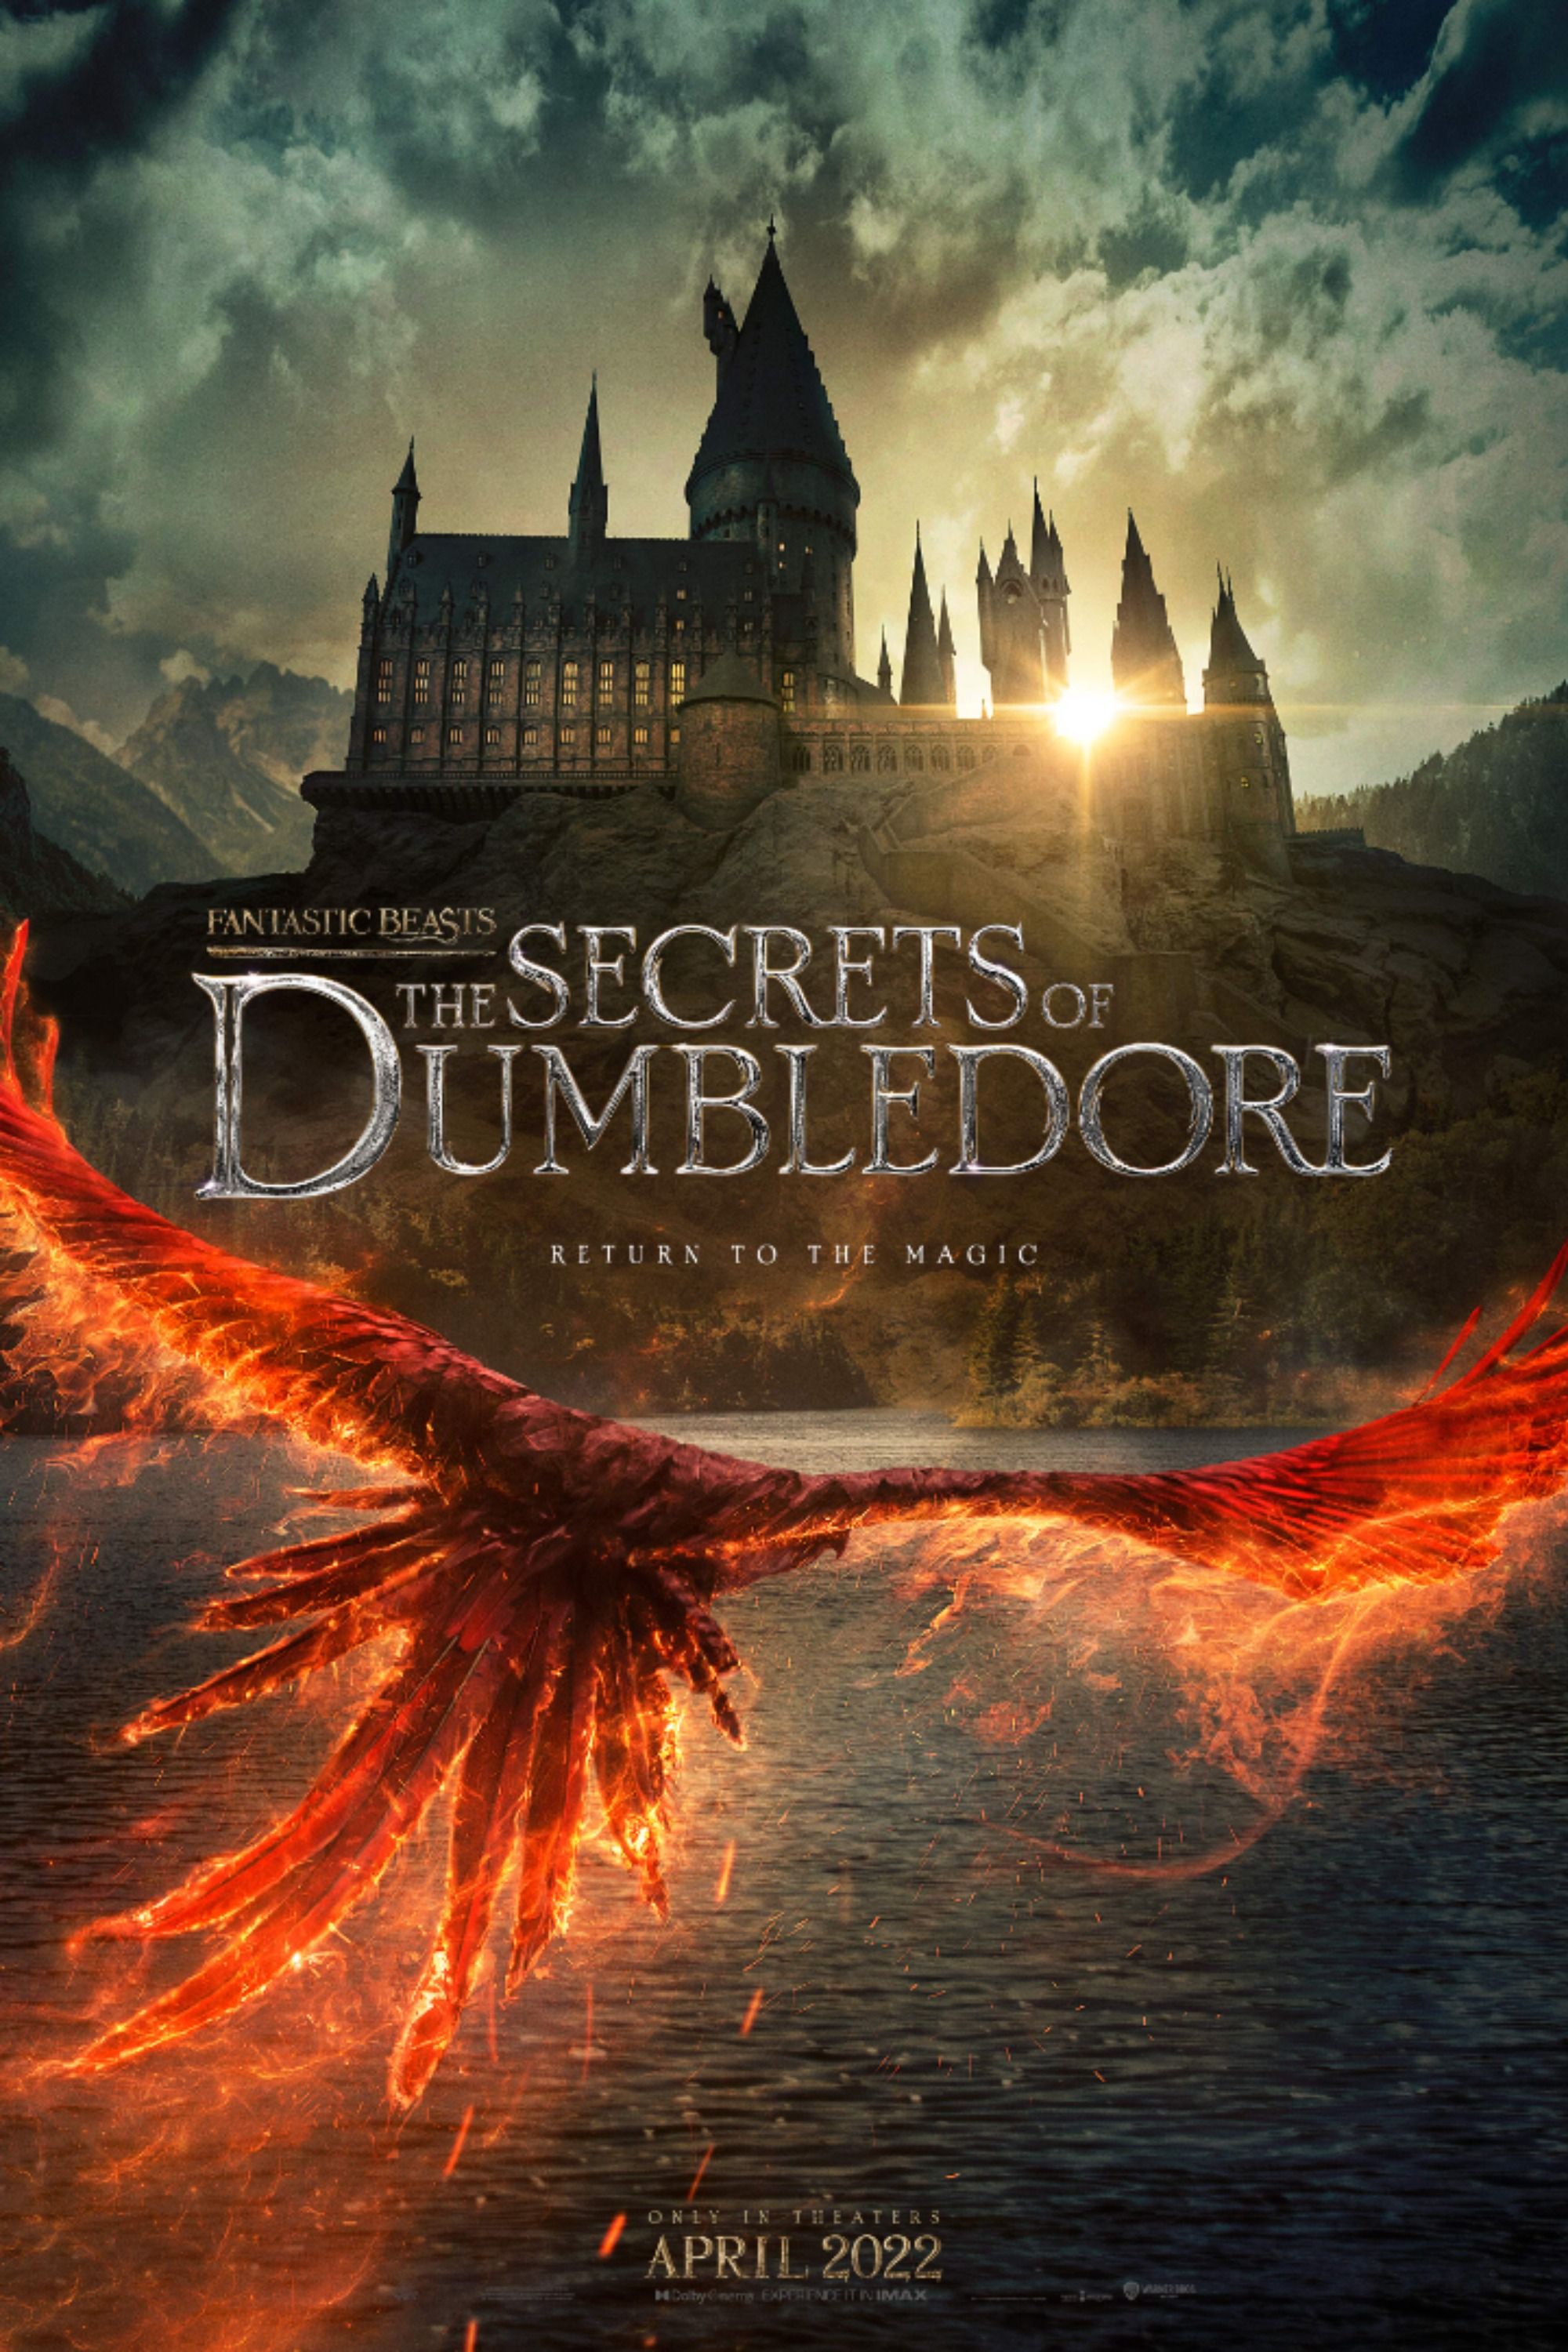 Fantastic Beasts The Secrets of dumbledore